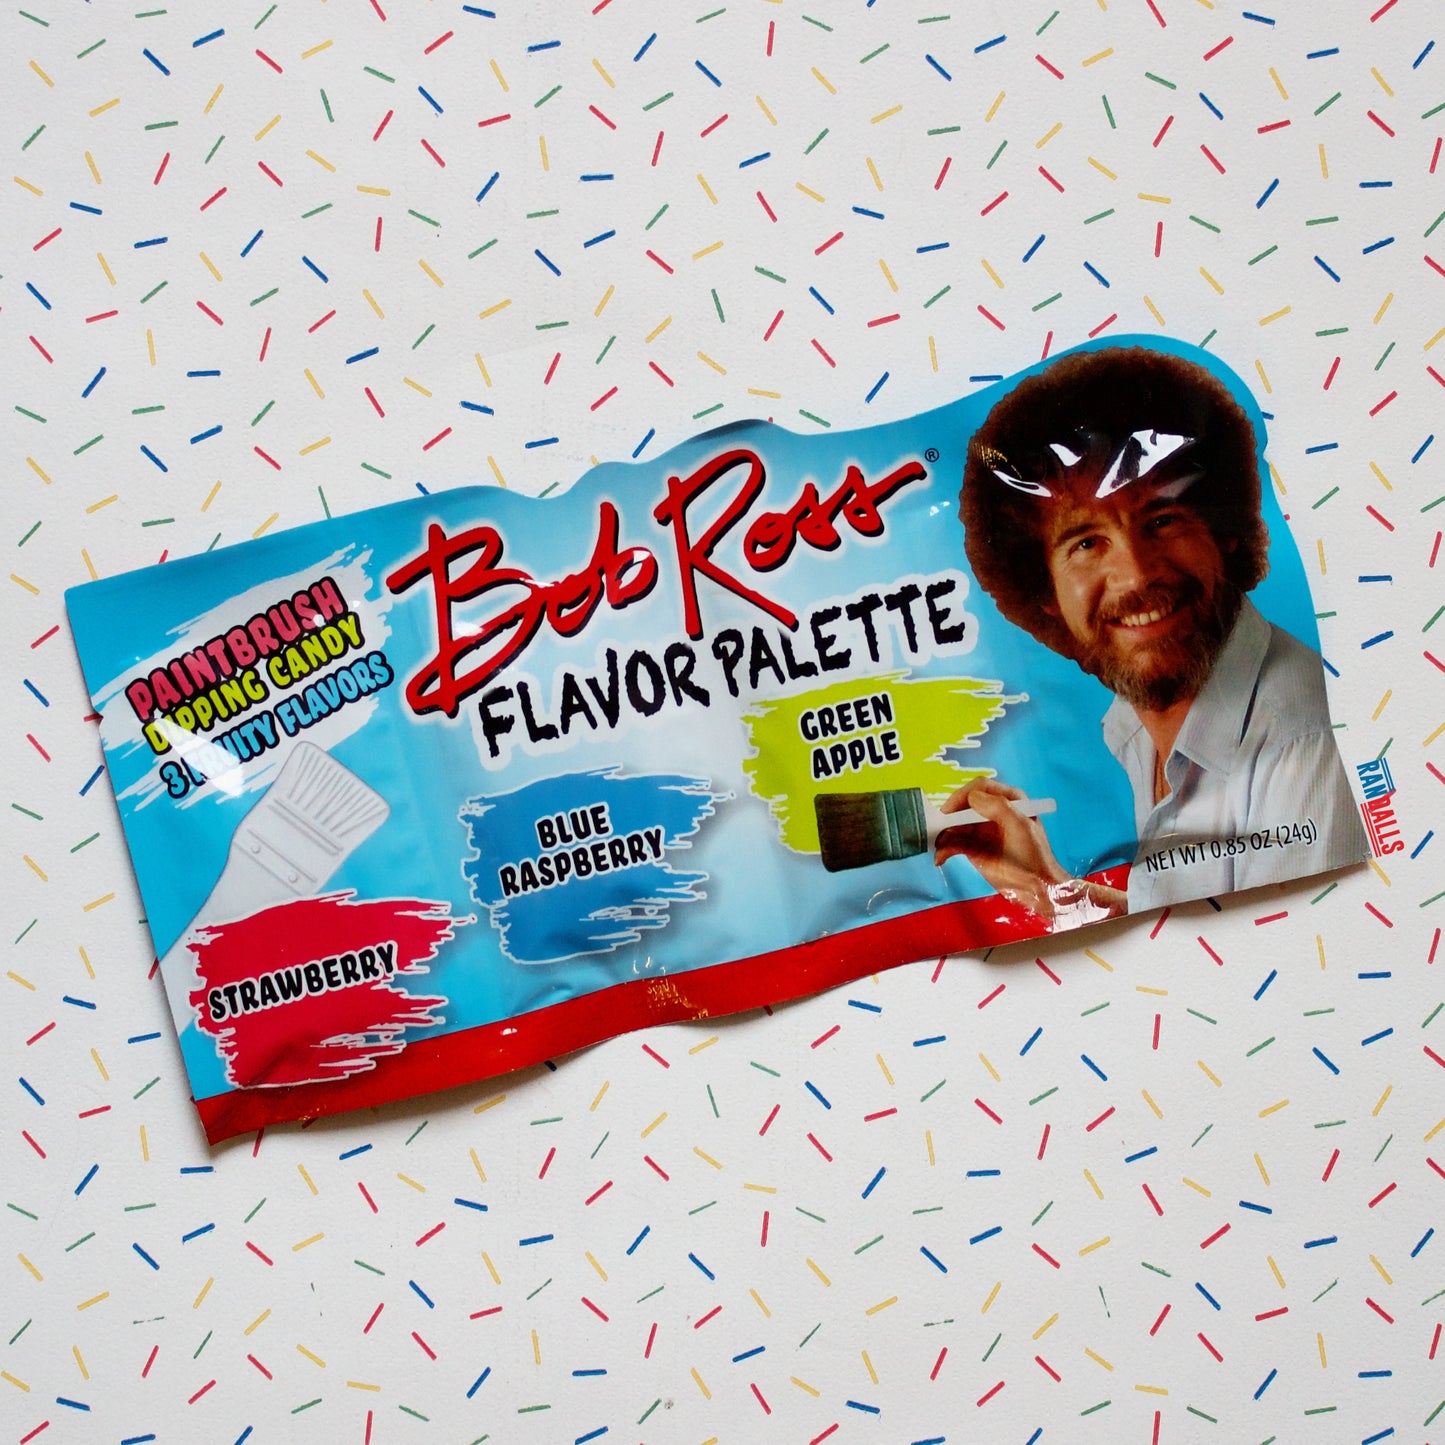 bob ross candy flavour palette, sherbet, dipping candy, lollipop, strawberry, blue raspberry, green apple, usa, randalls